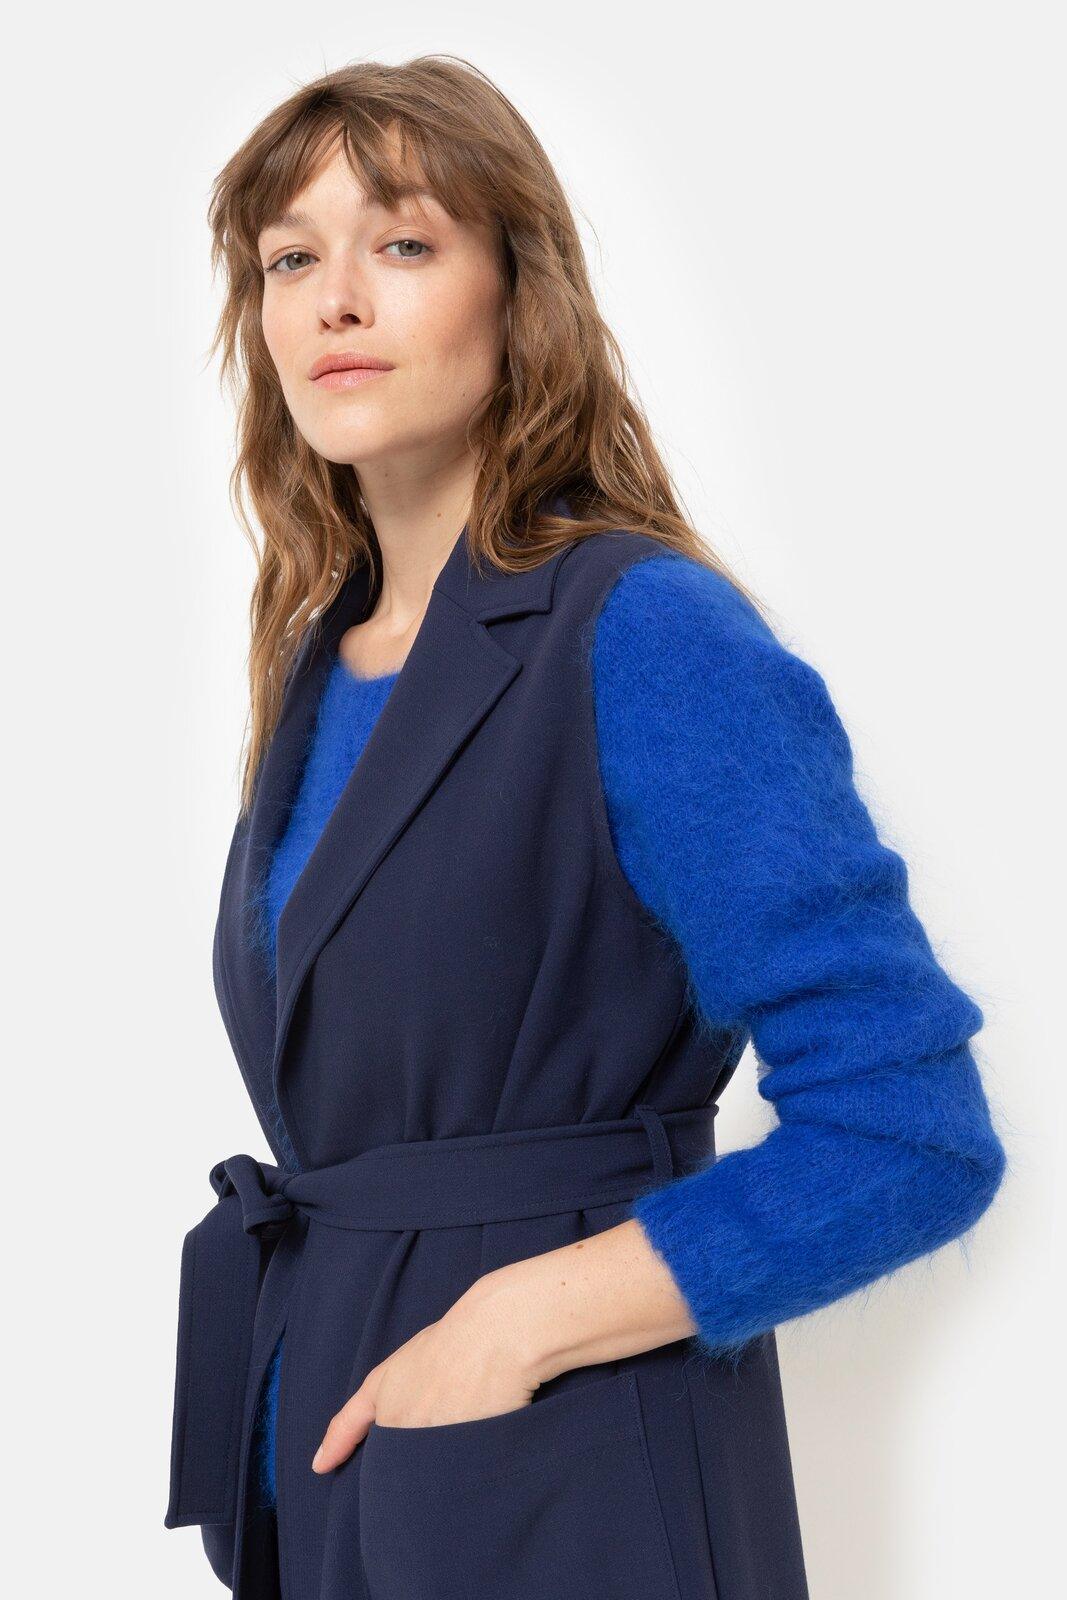 Giletvest Marine Terre Bleue ( Oona/575 ) - Delaere Womenswear